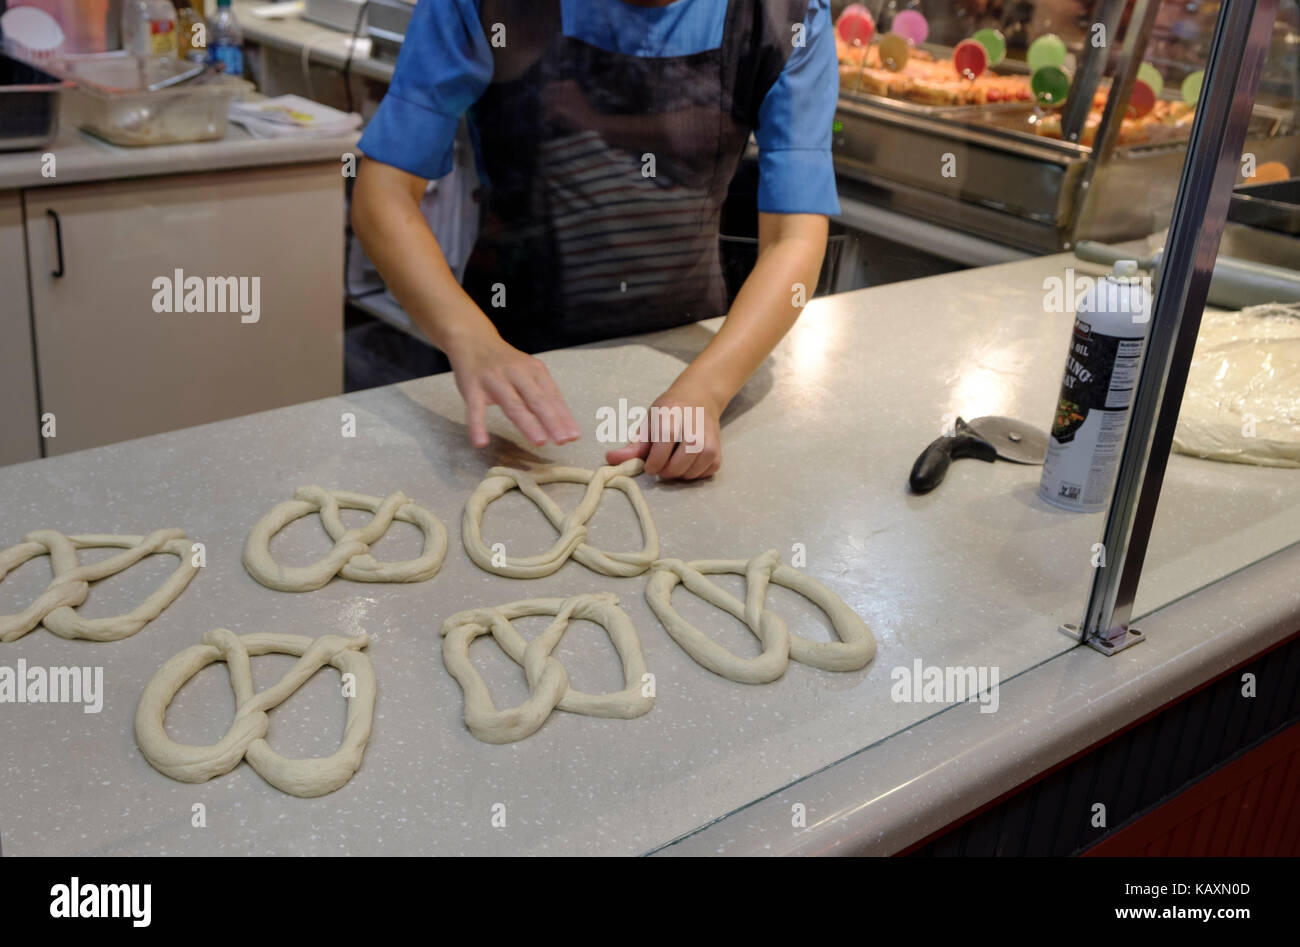 Amish people making a pretzel in Reading Terminal Market, Philadelphia, PA, USA Stock Photo